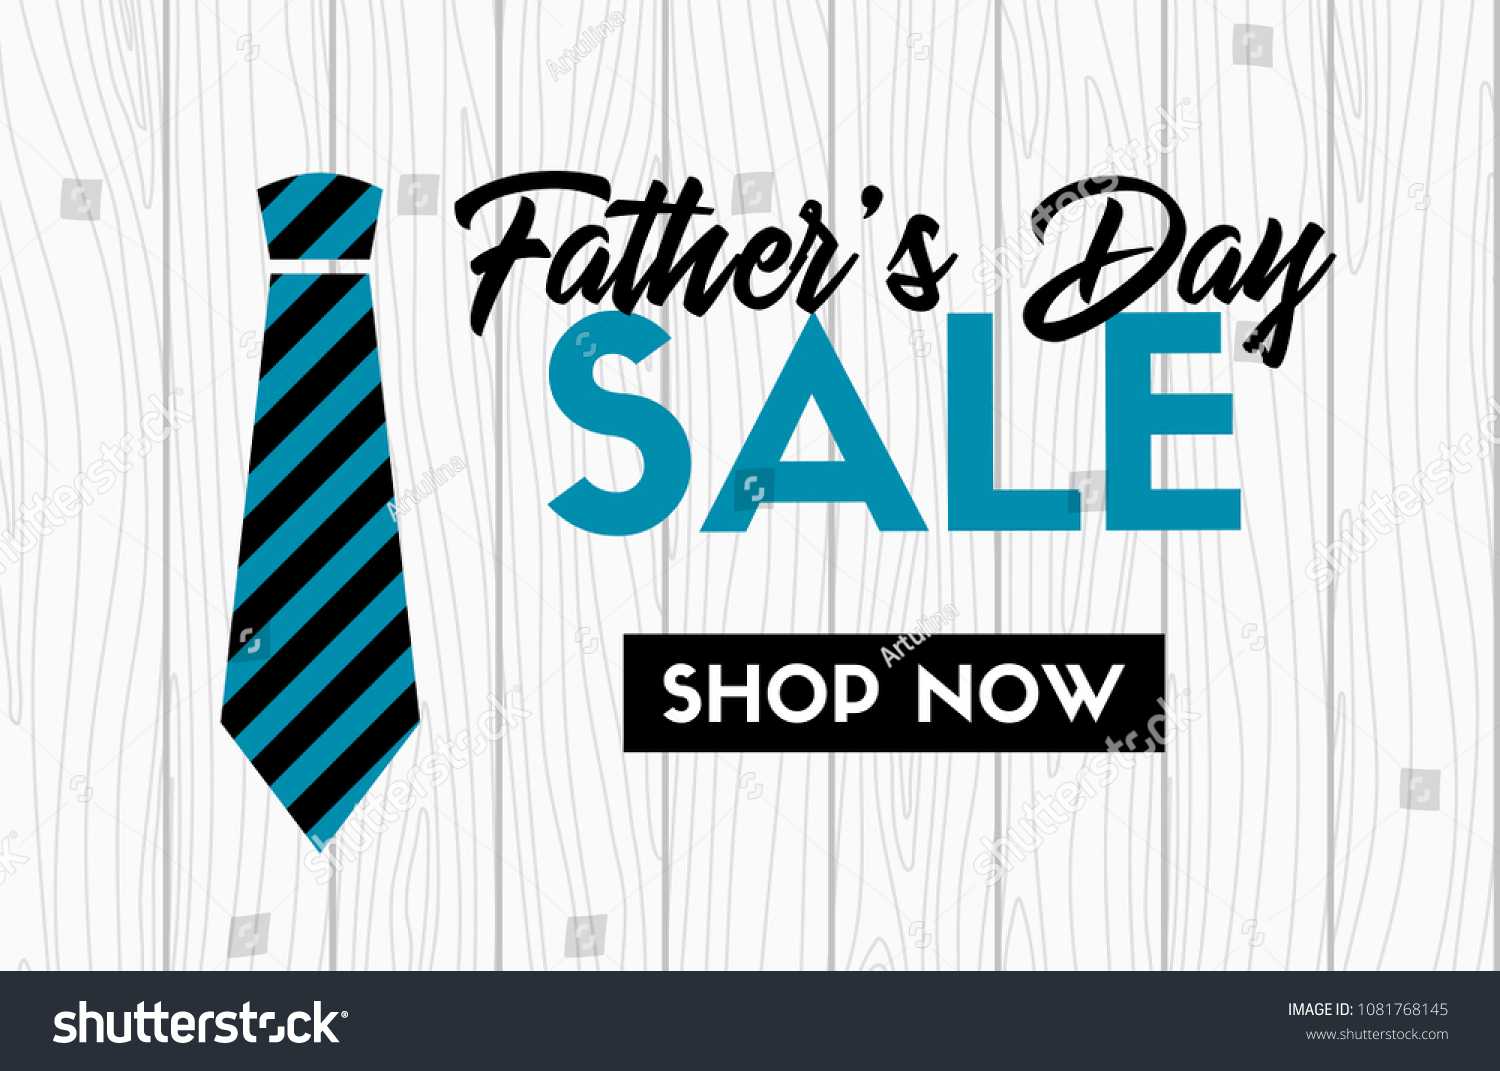 Стоковая Векторная Графика «Fathers Day Sale Vector Banner For Tie Banner Template